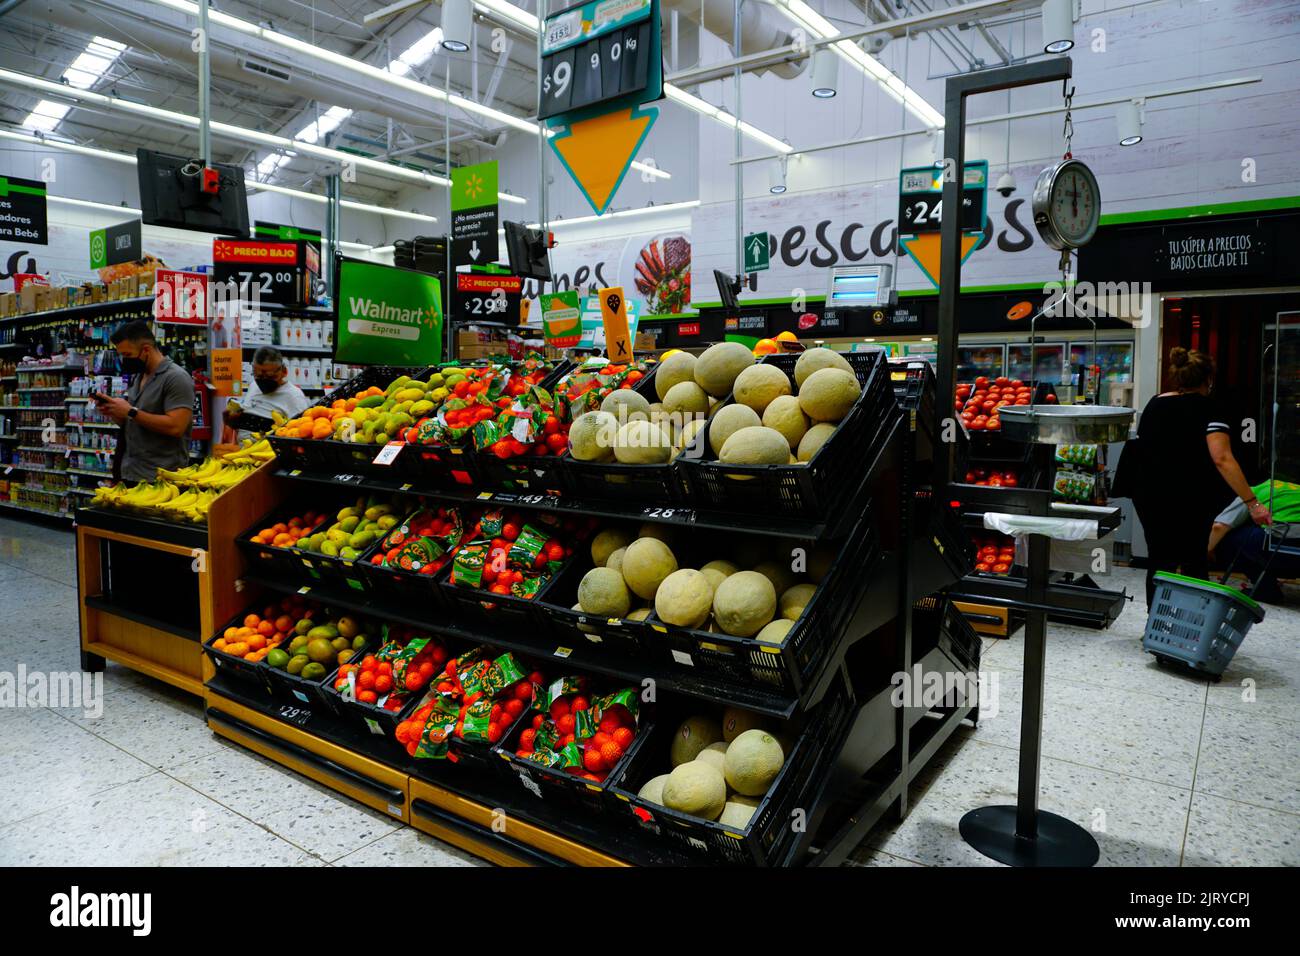 Walmart Express grocery store, Mexico City, Mexico Stock Photo